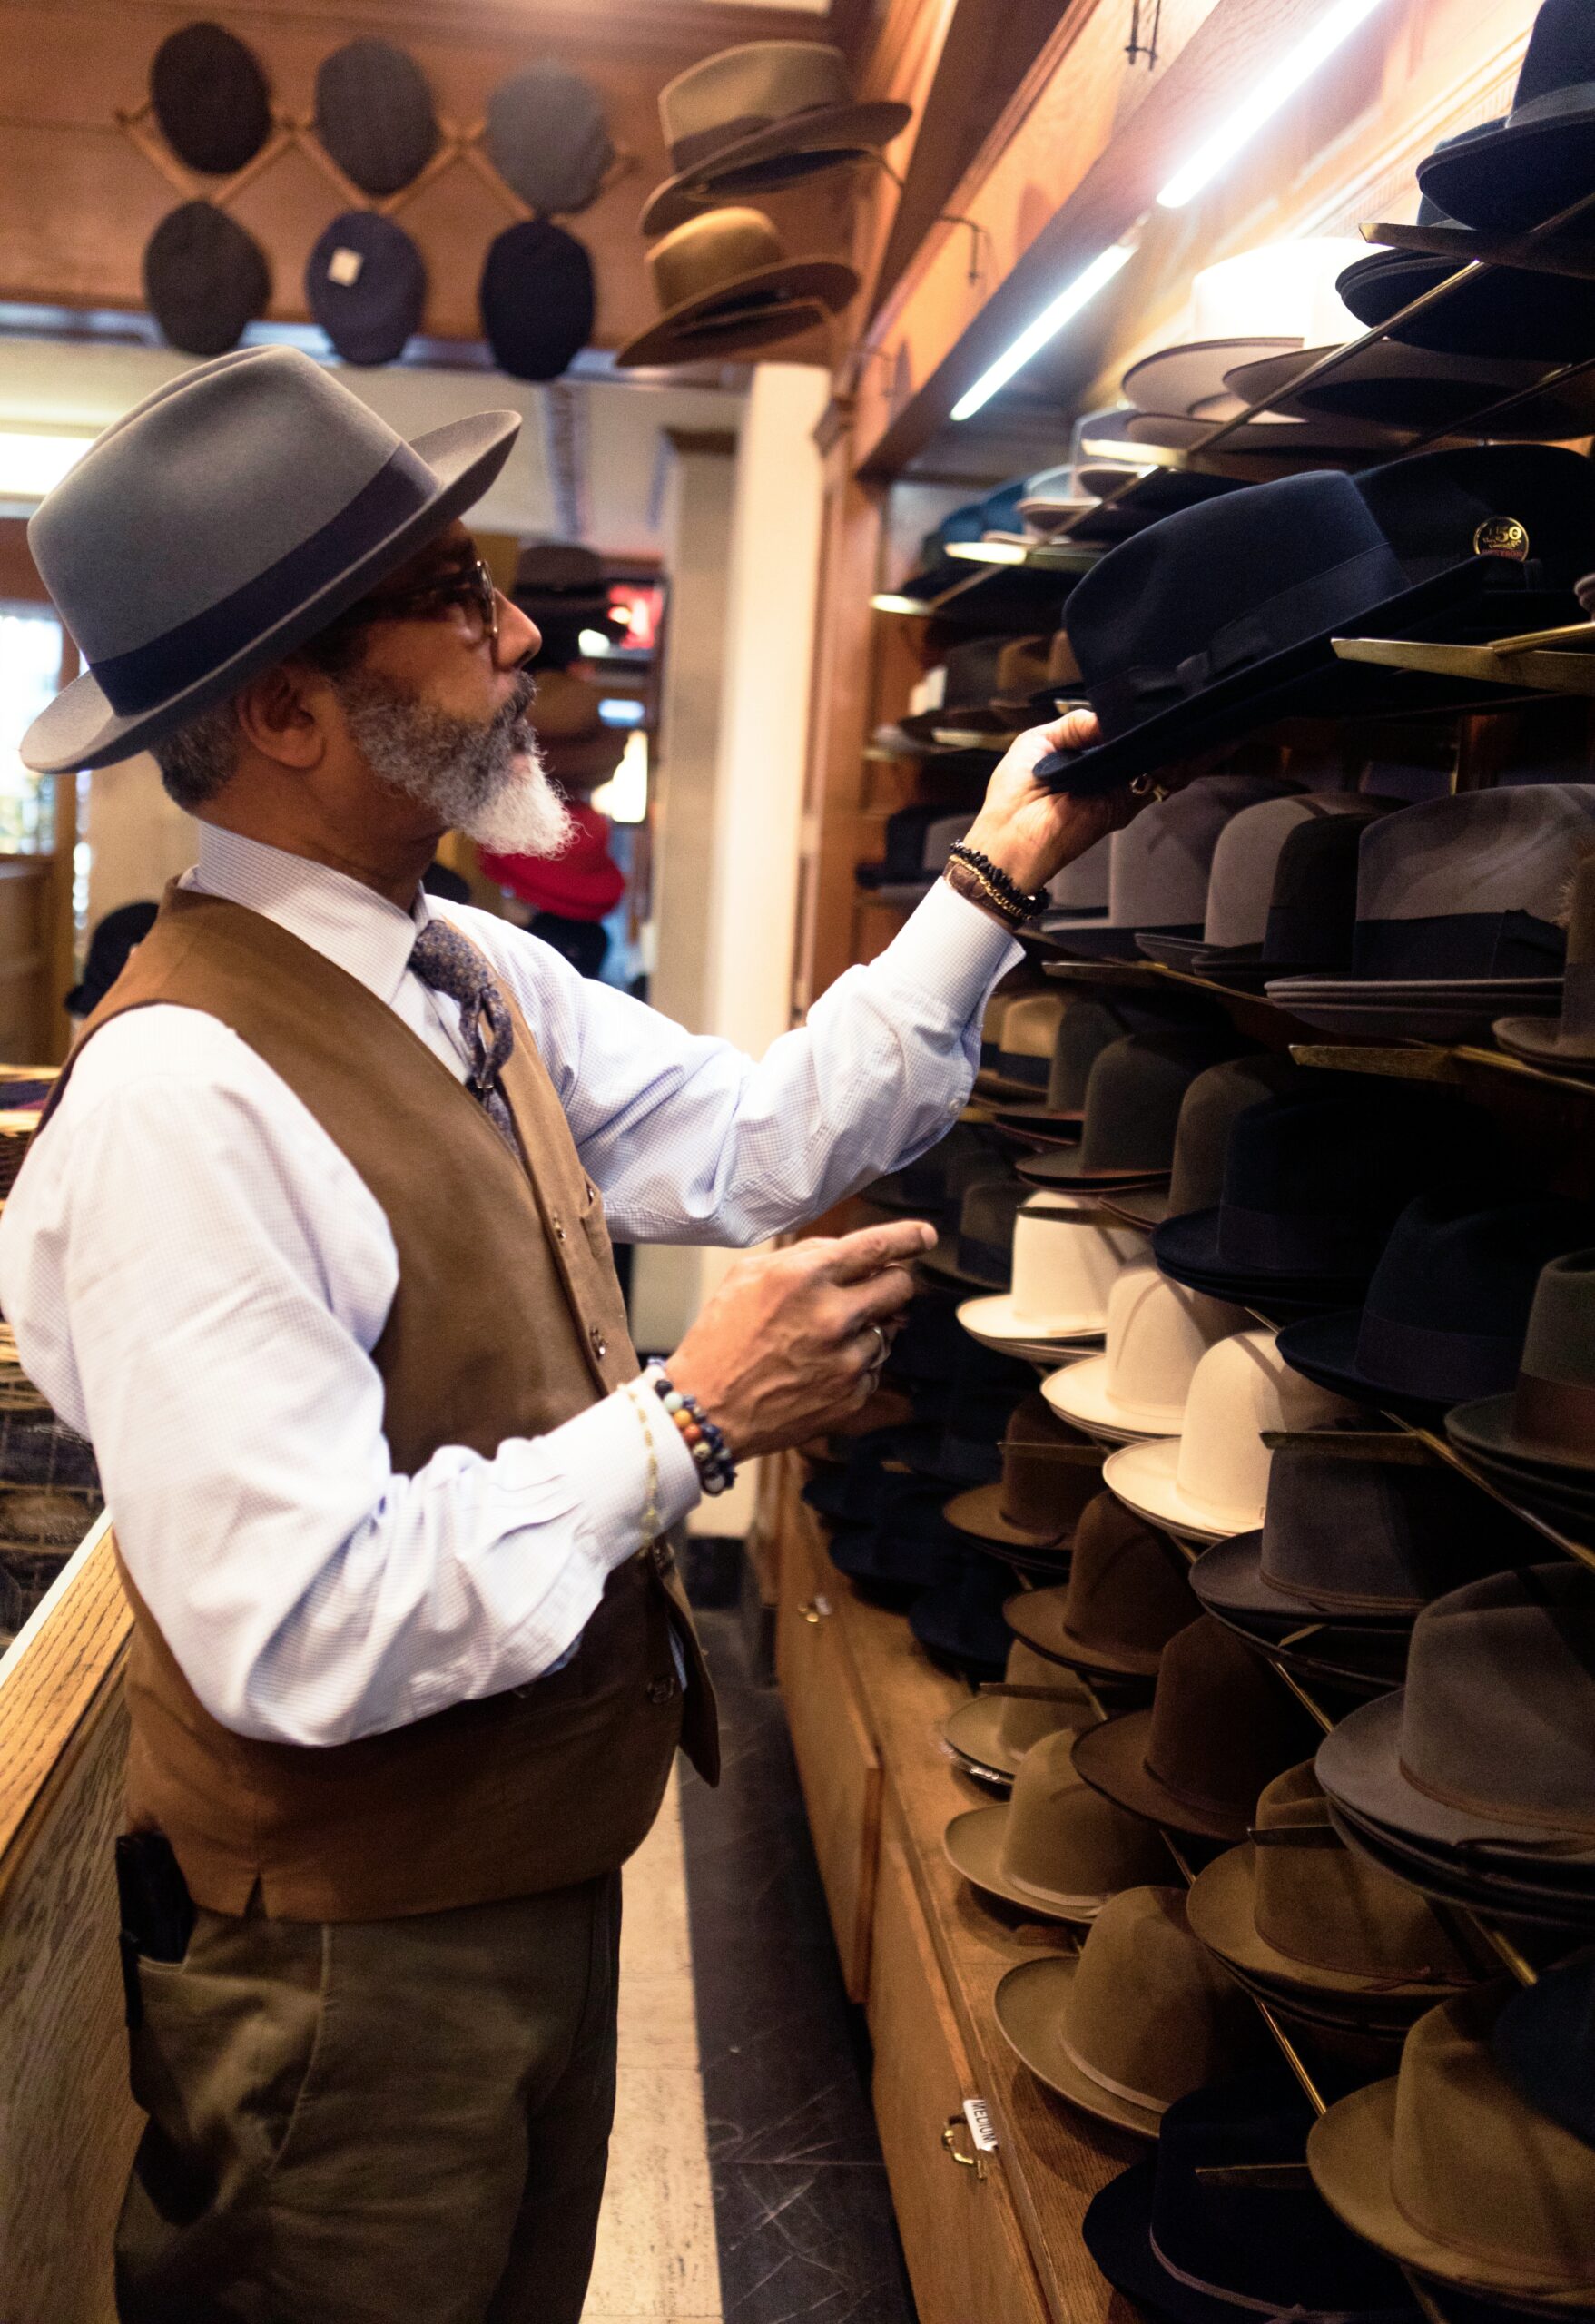 Man picking hats on a store’s shelf.